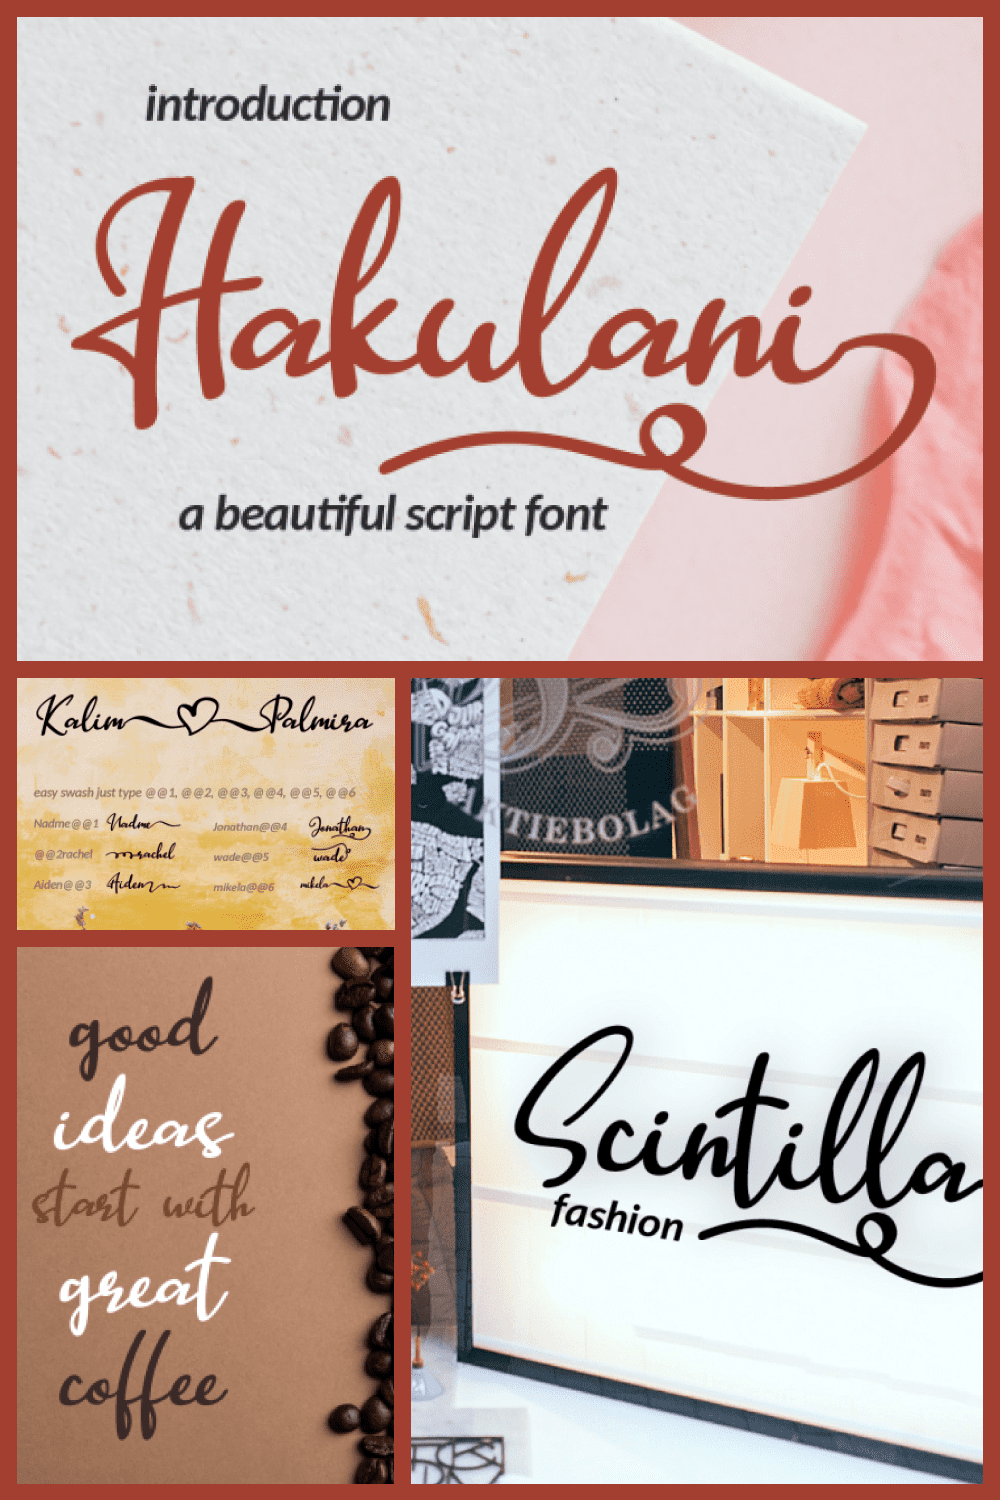 Hakulani Script Font - MasterBundles - Pinterest Collage Image.